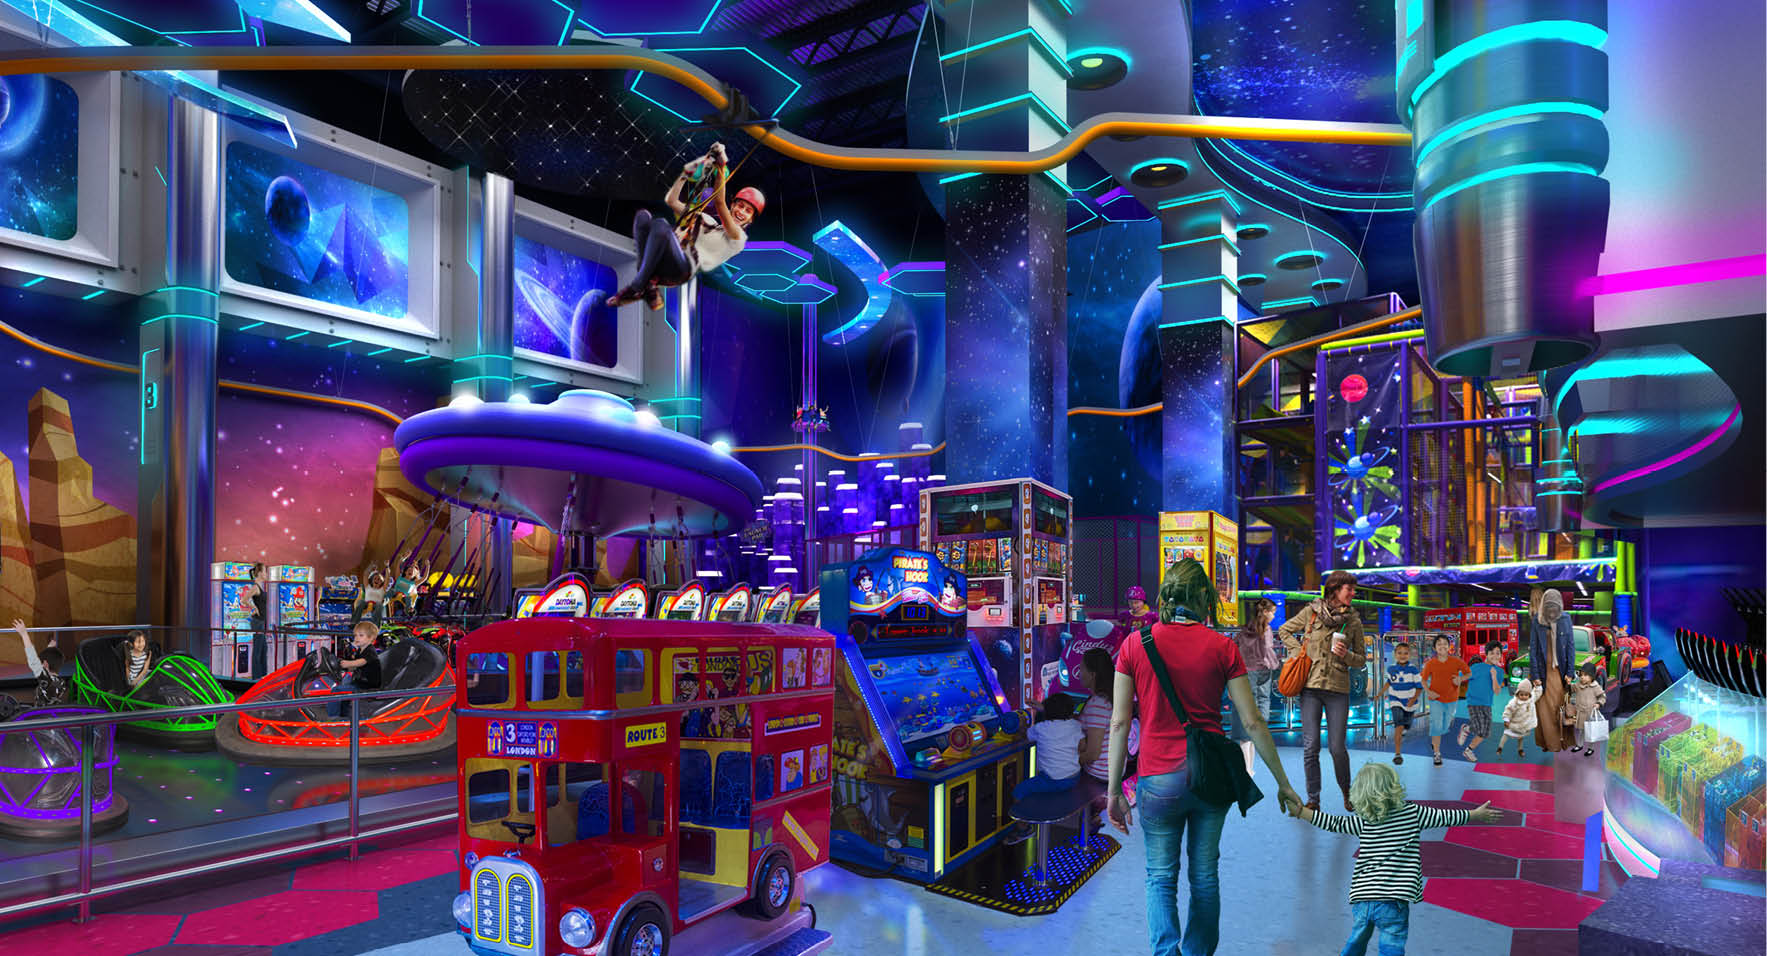 Magic Planet Dubai | Things to do with Kids in Dubai